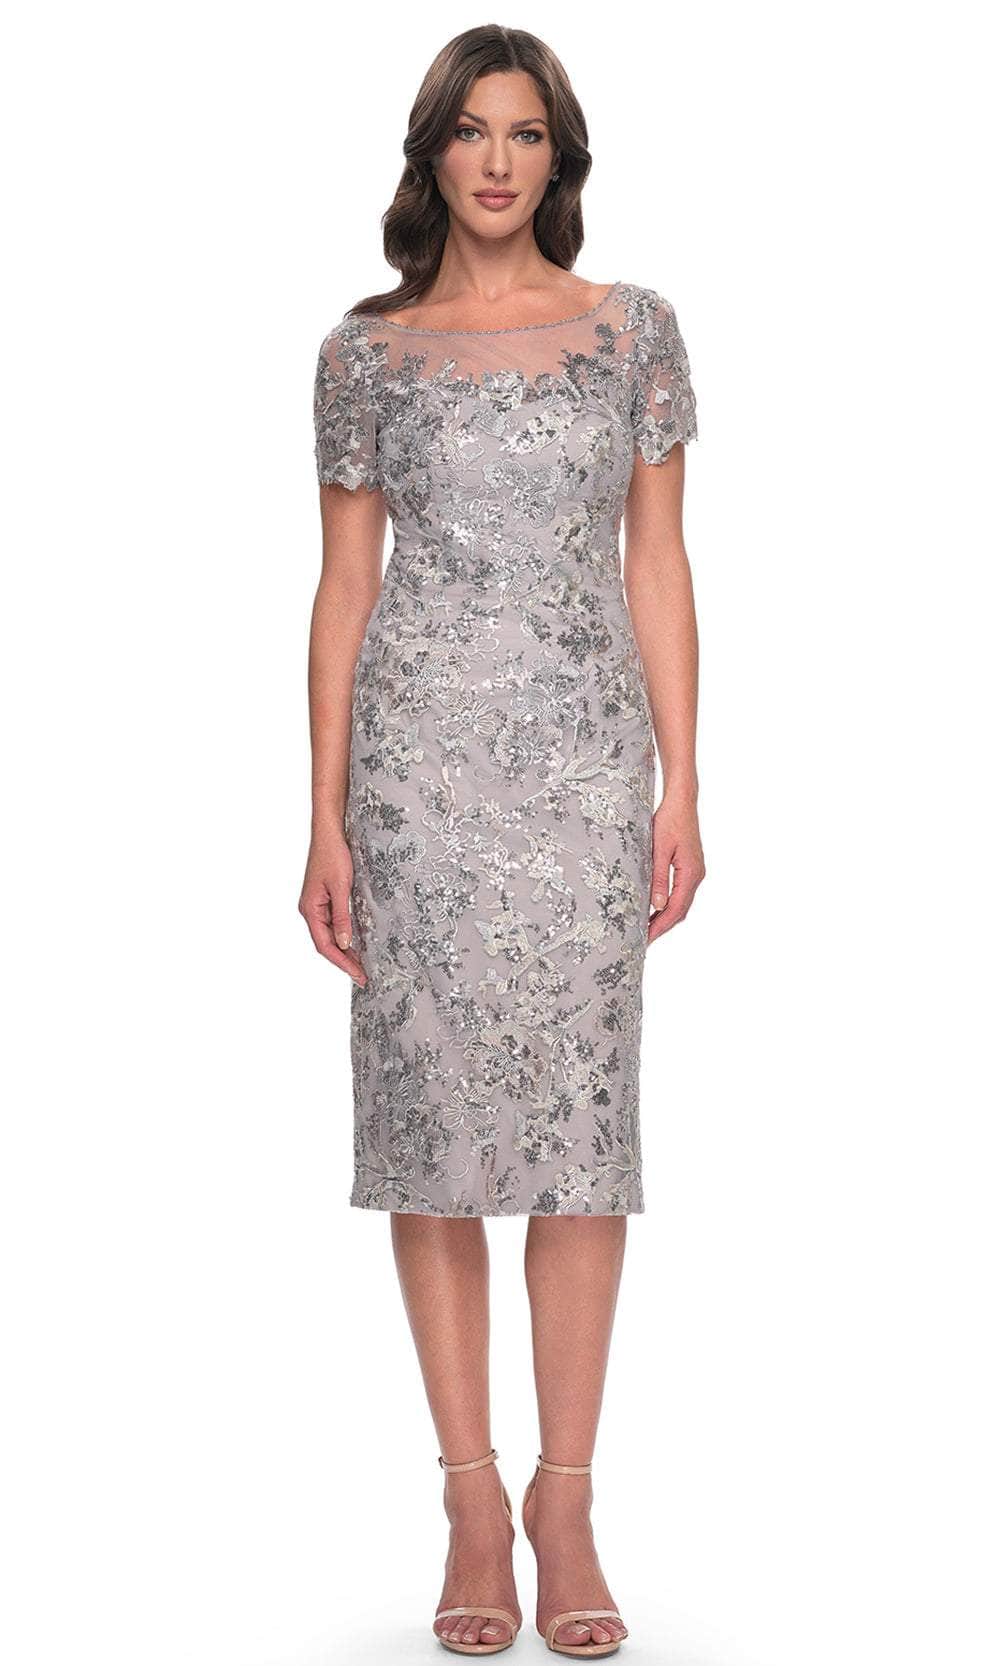 La Femme 30854 - Embroidered Knee-Length Dress Mother of the Bride Dresses 2 / Silver